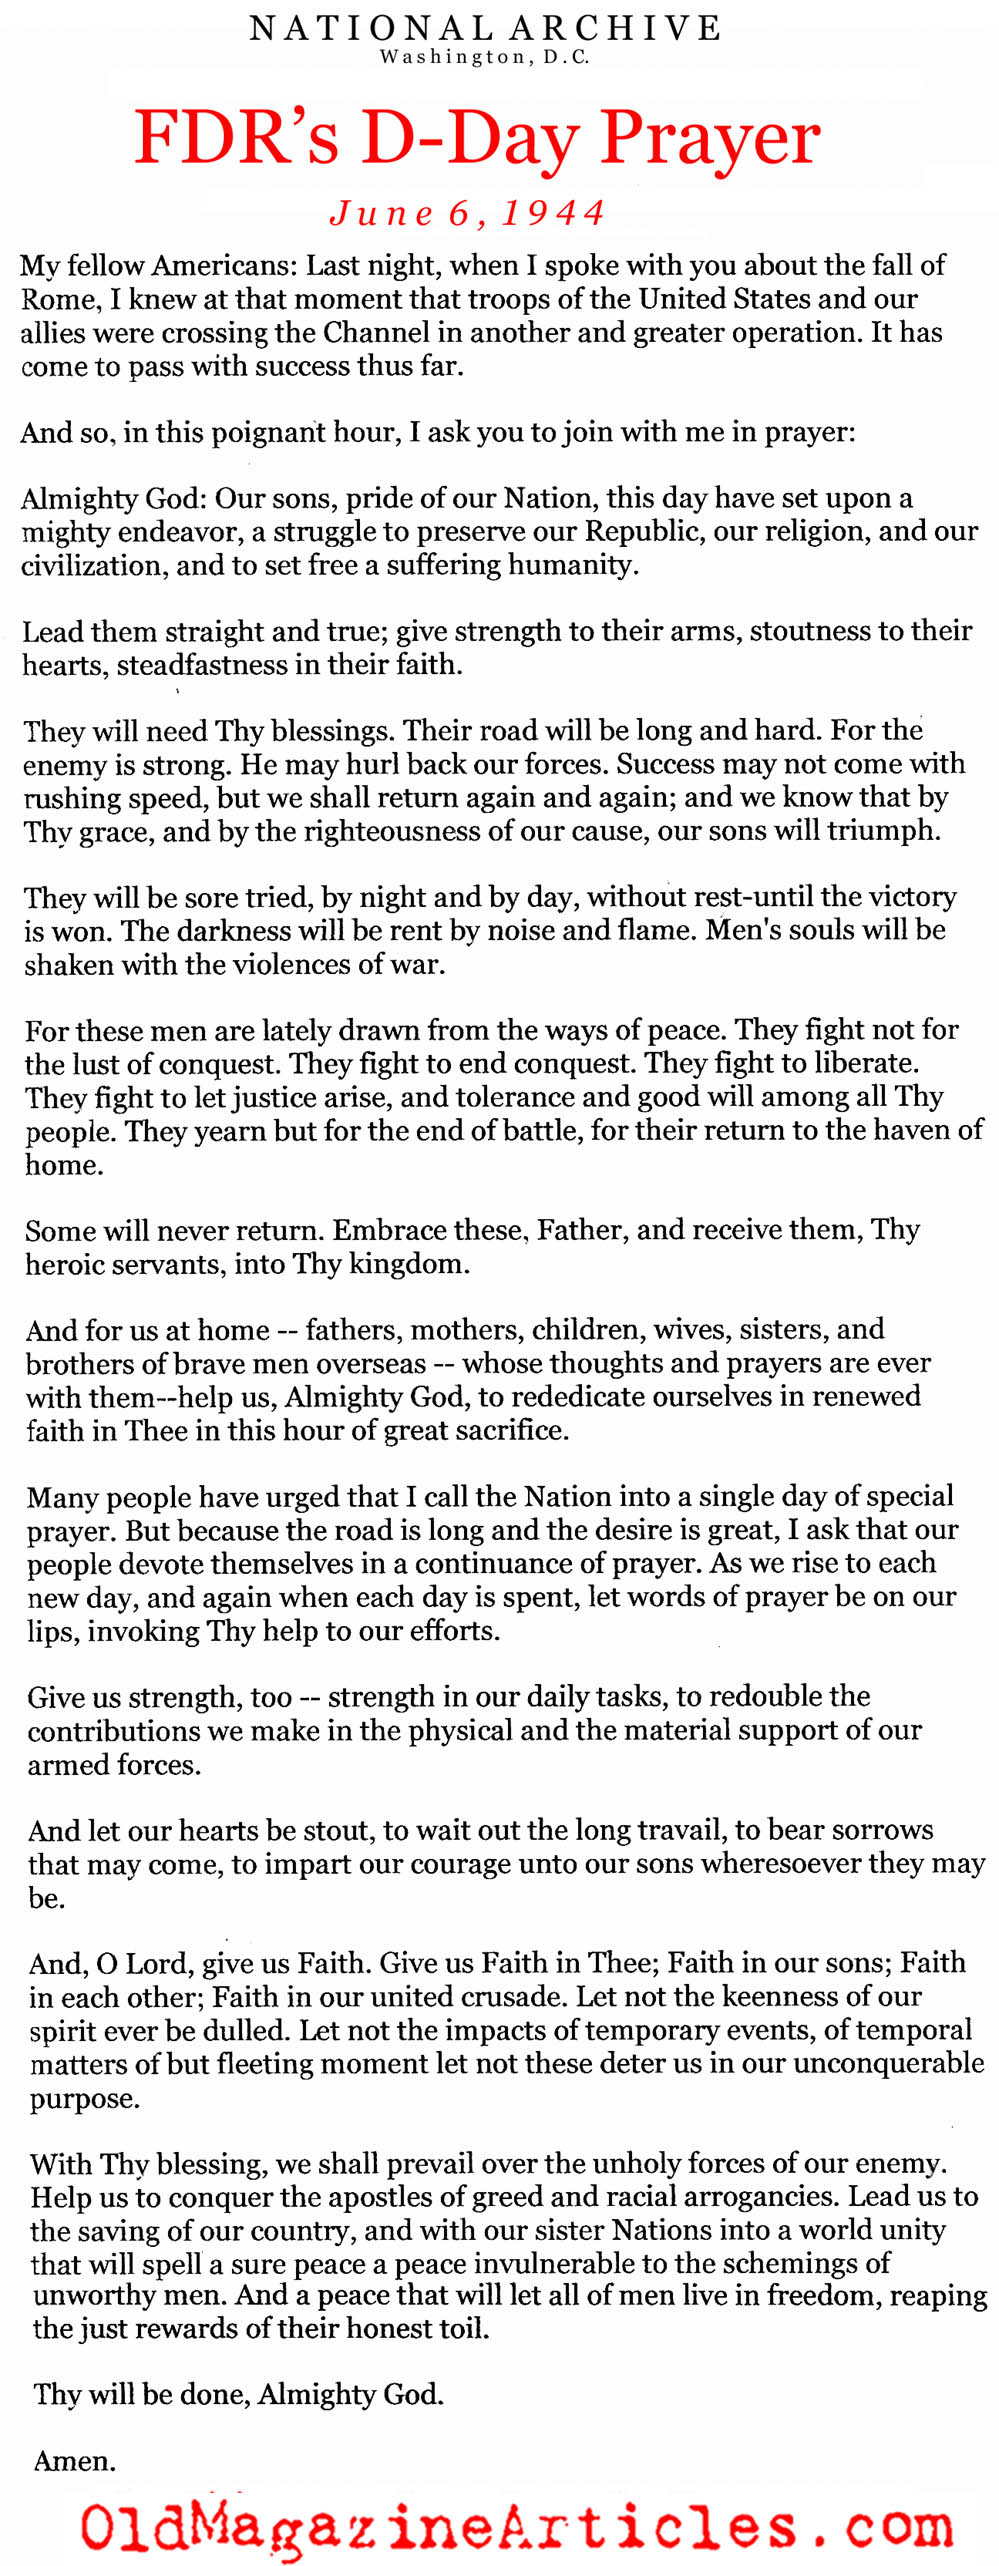 The President's Prayer (National Archive)